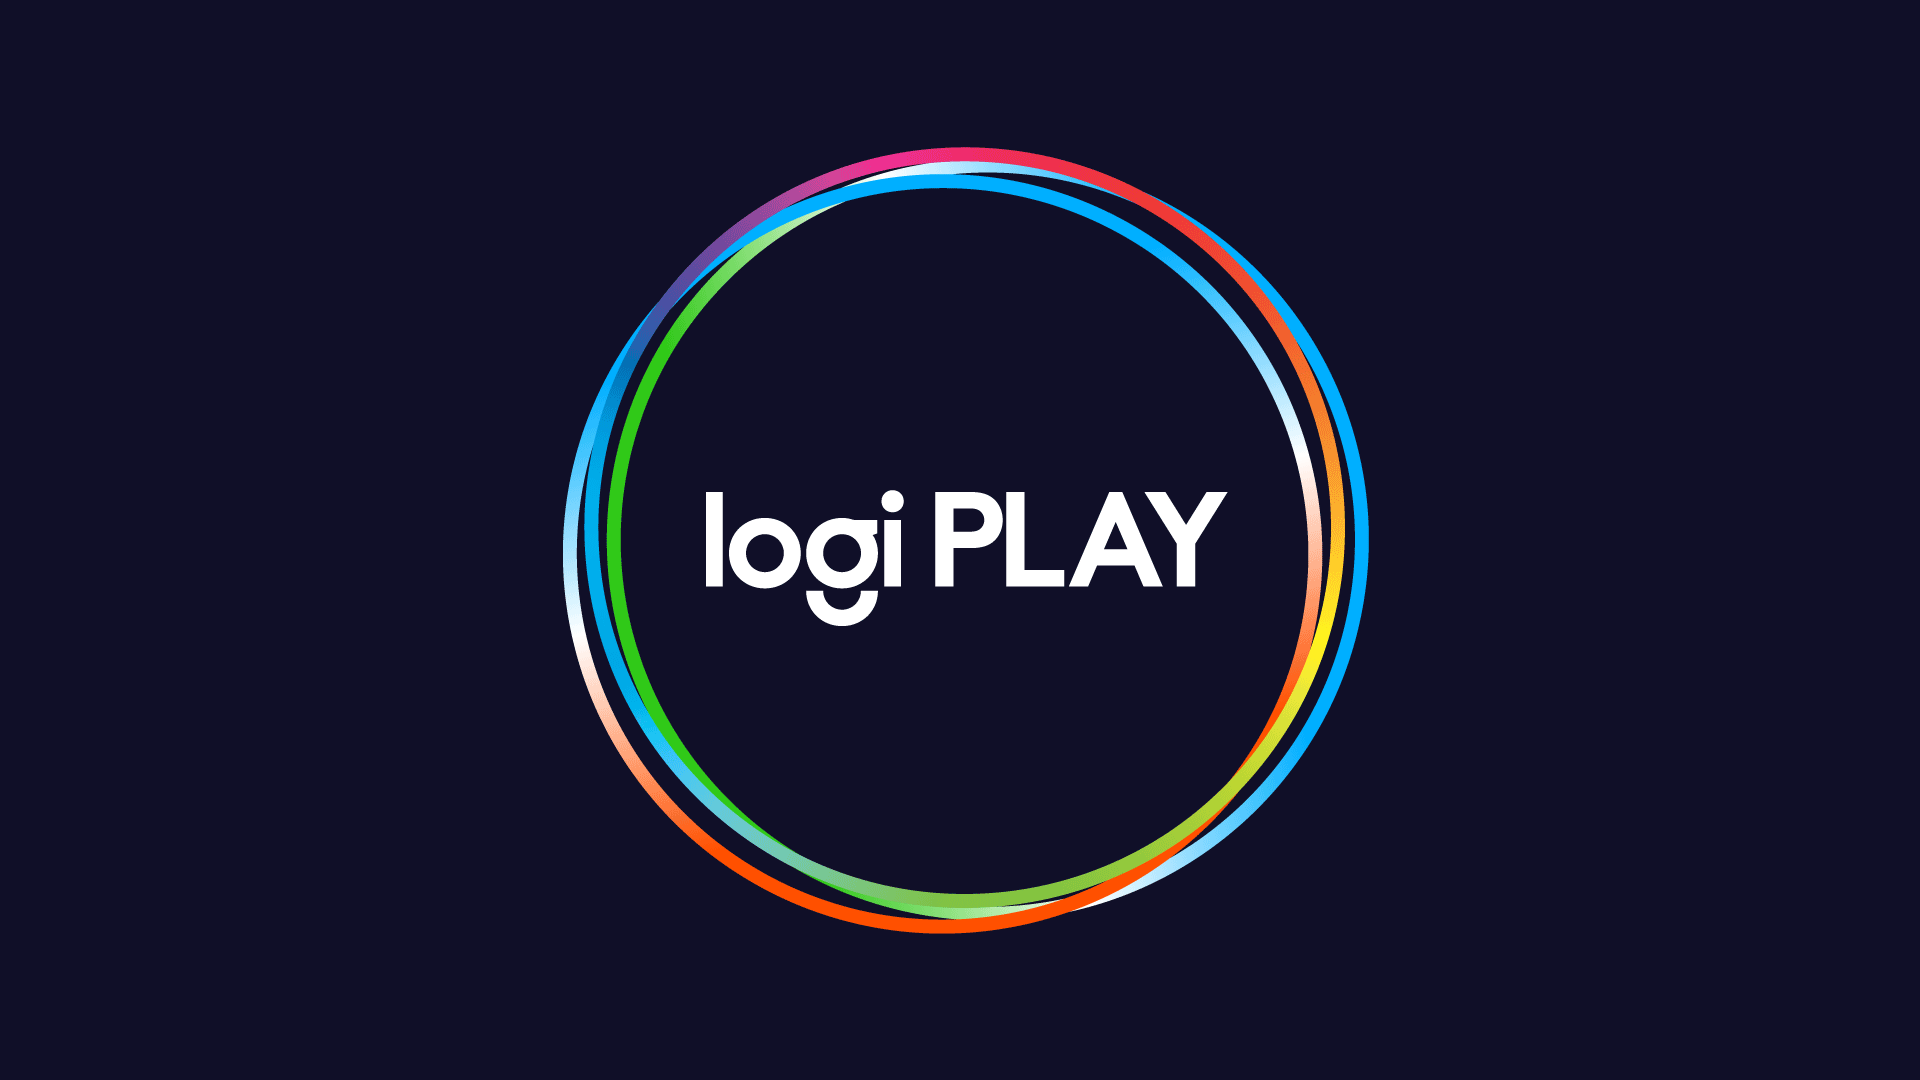 Logiplay 2022 event logo